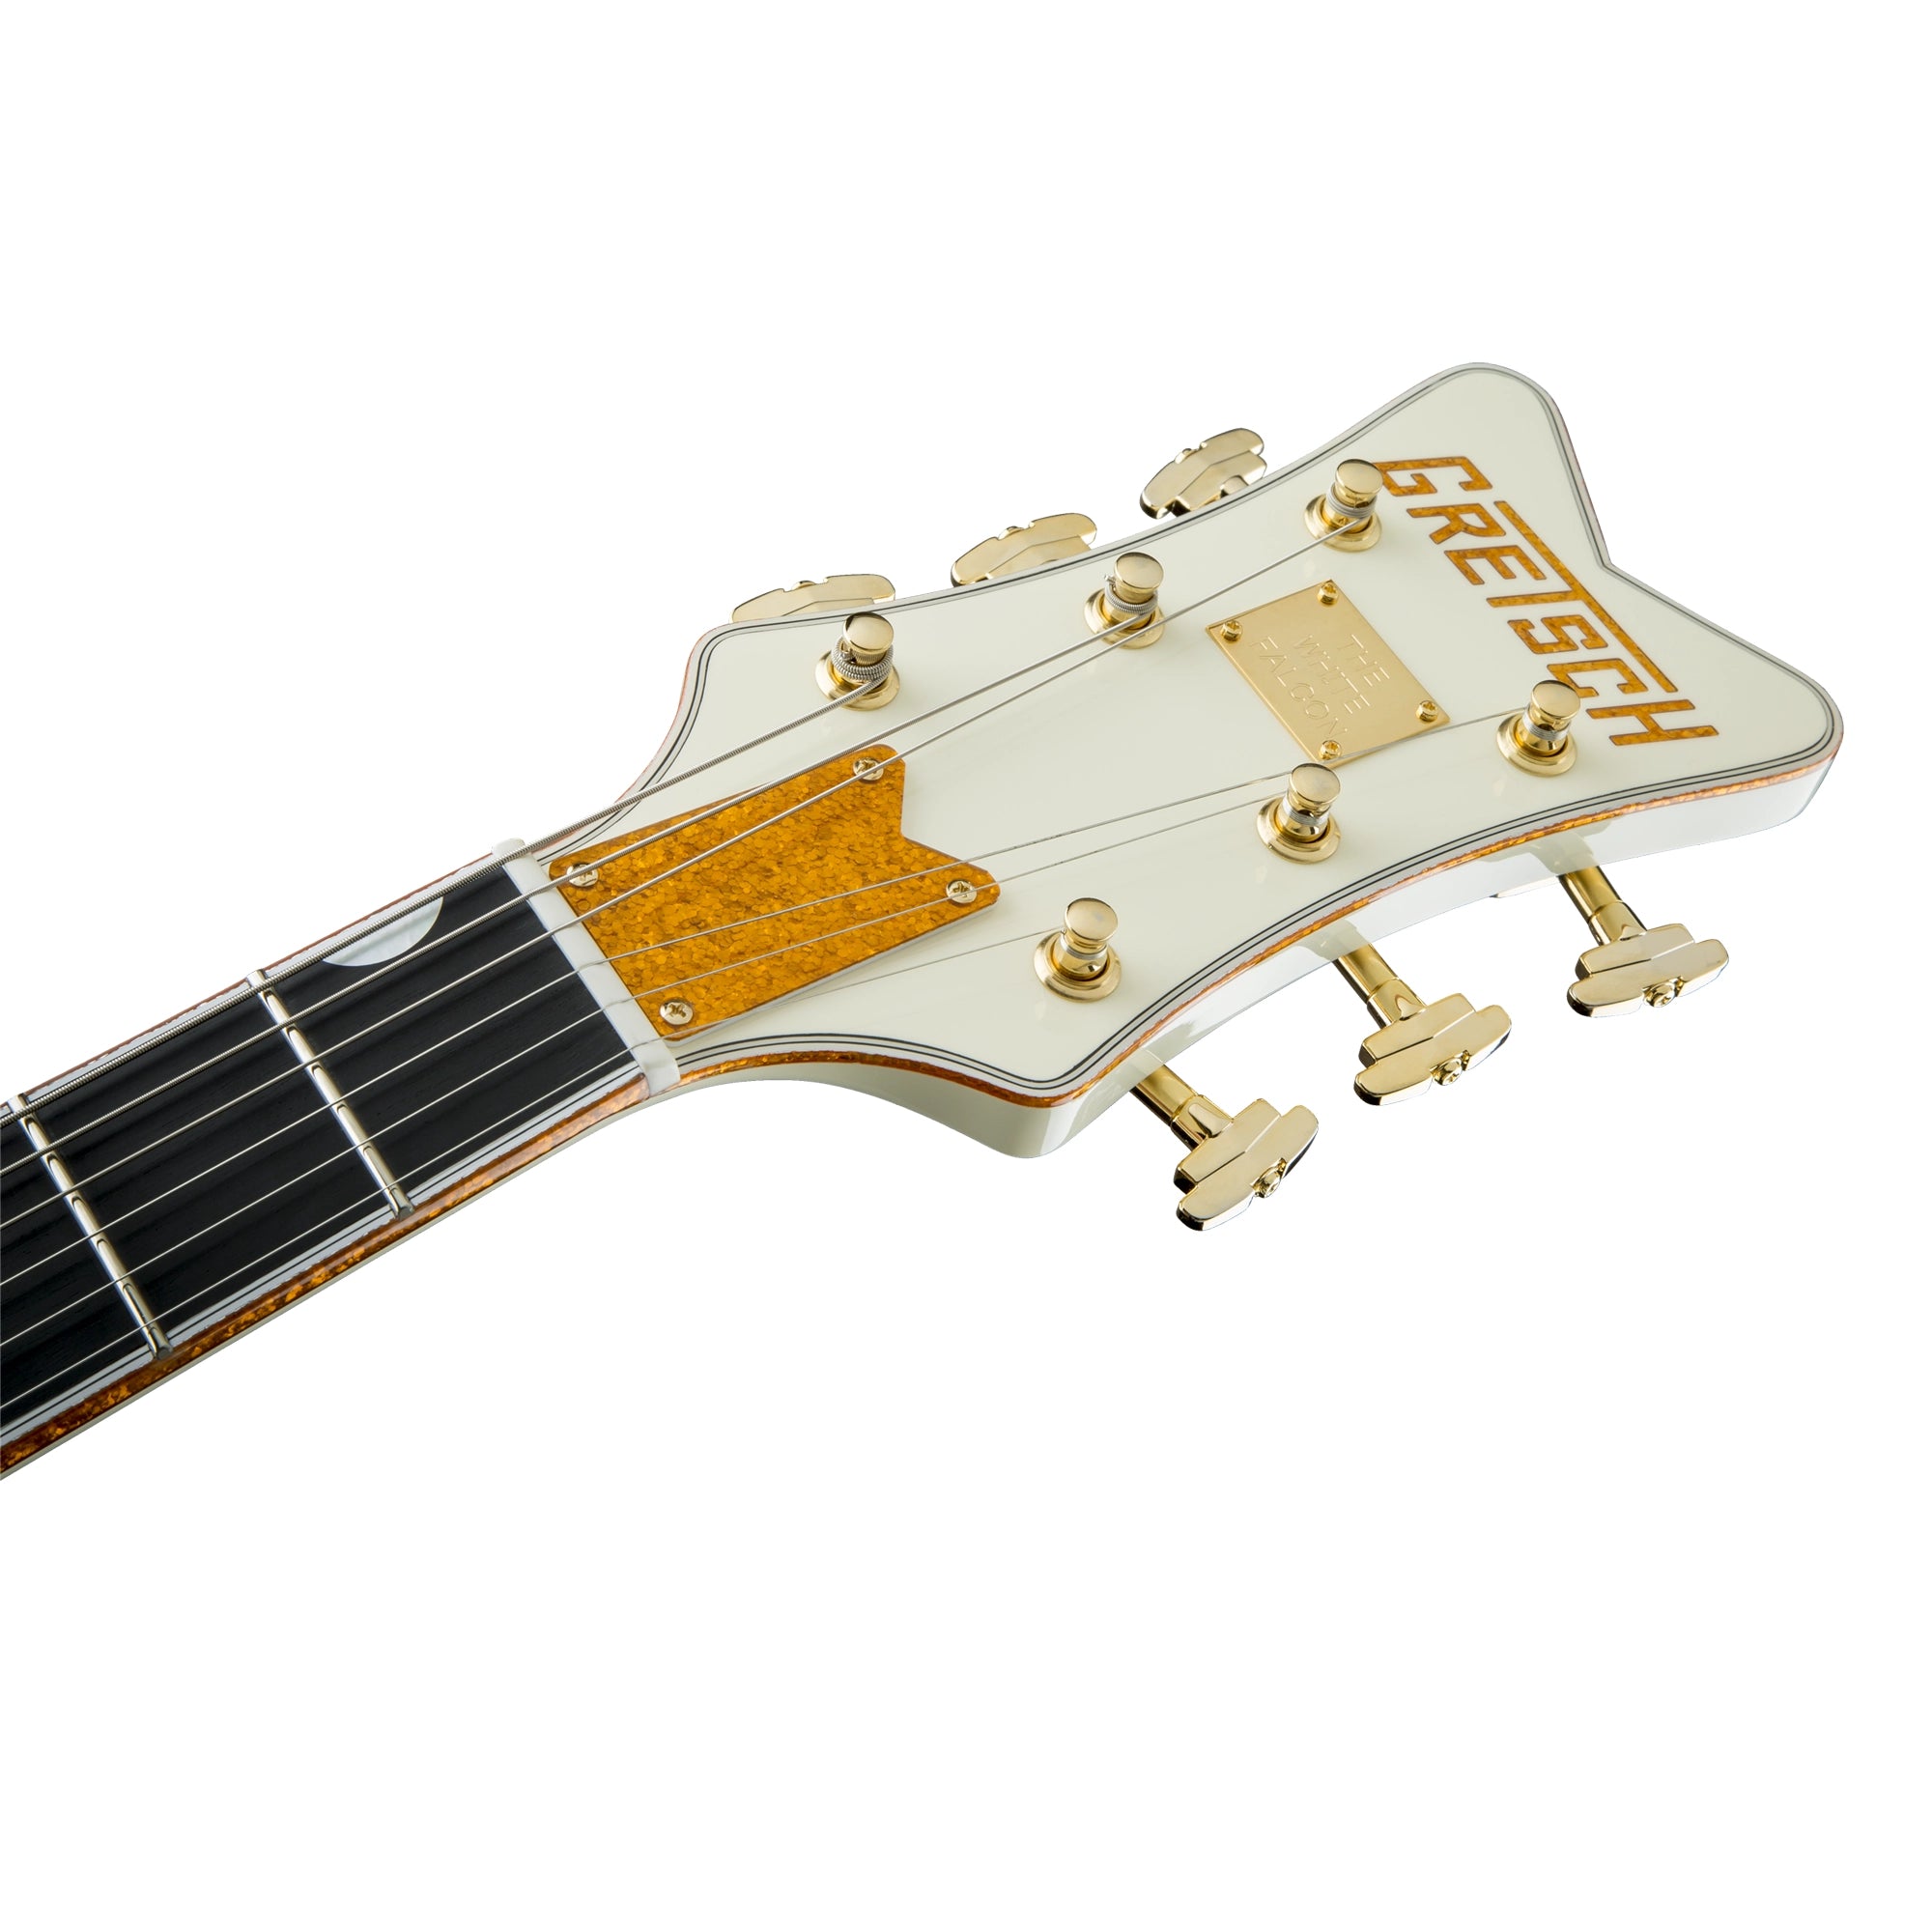 Gretsch G6136T-59GE Vintage Select 1959 Falcon Hollowbody Electric Guitar - Vintage White